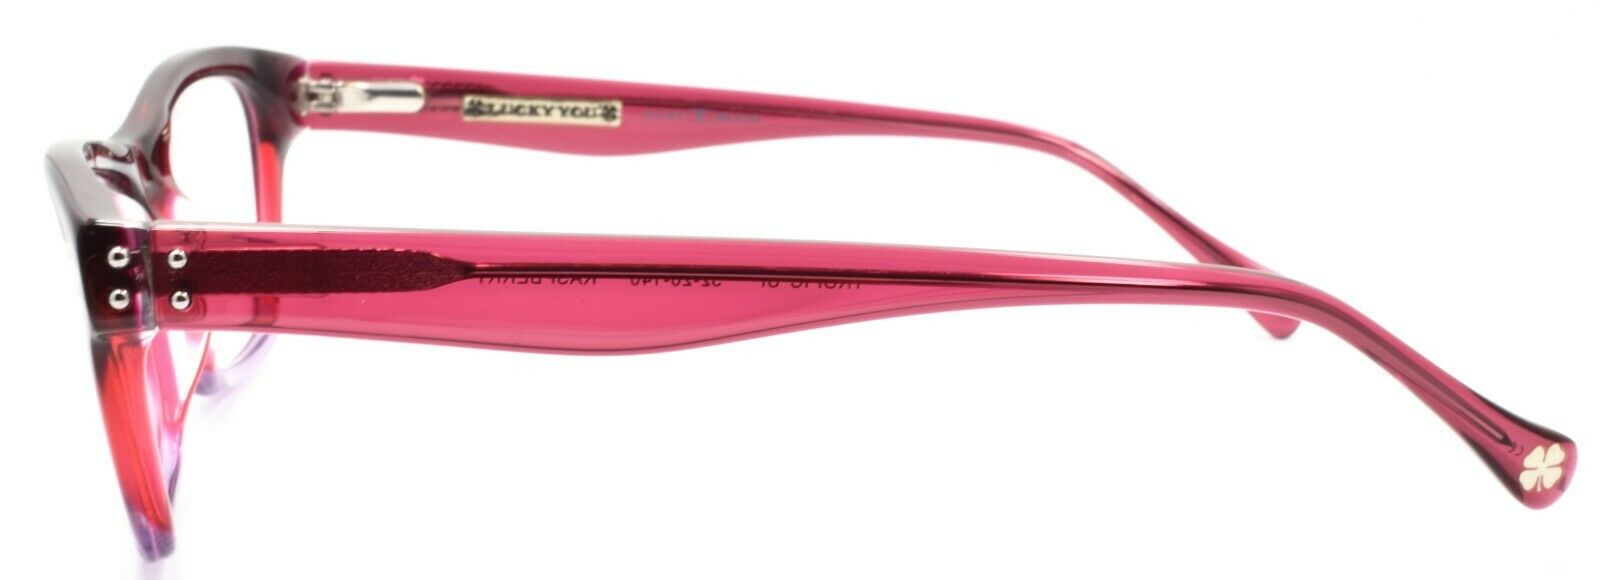 3-LUCKY BRAND Tropic UF Women's Eyeglasses Frames 52-20-140 Raspberry + CASE-751286248227-IKSpecs